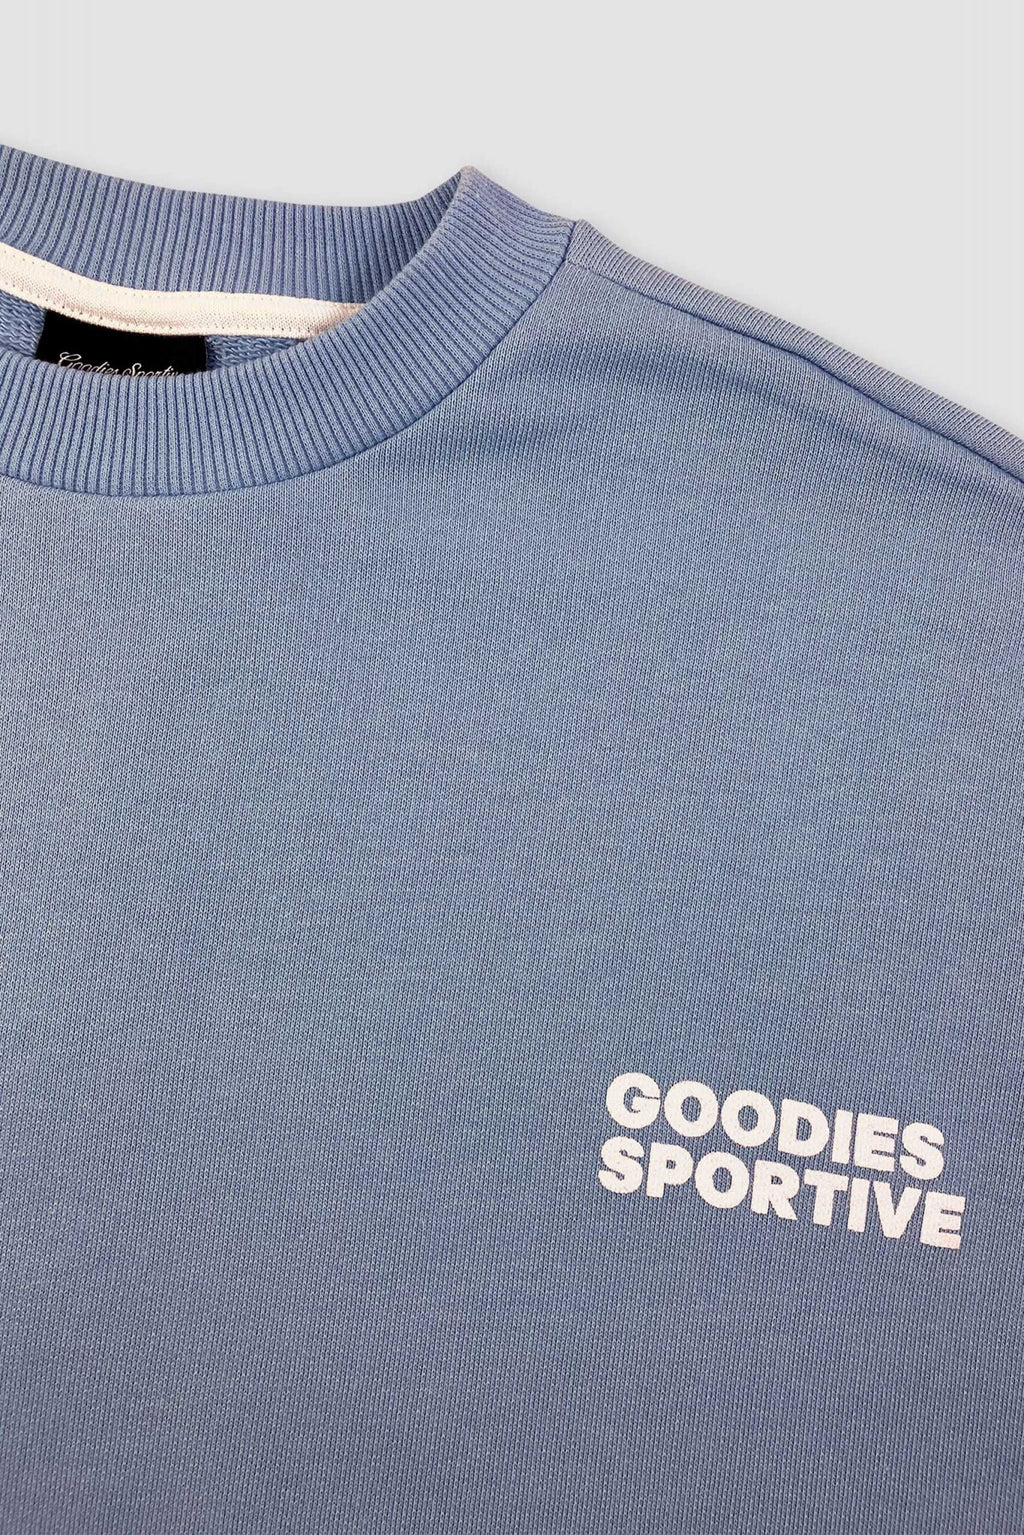 Goodies Sportive - Athleisure  Blue Crewneck